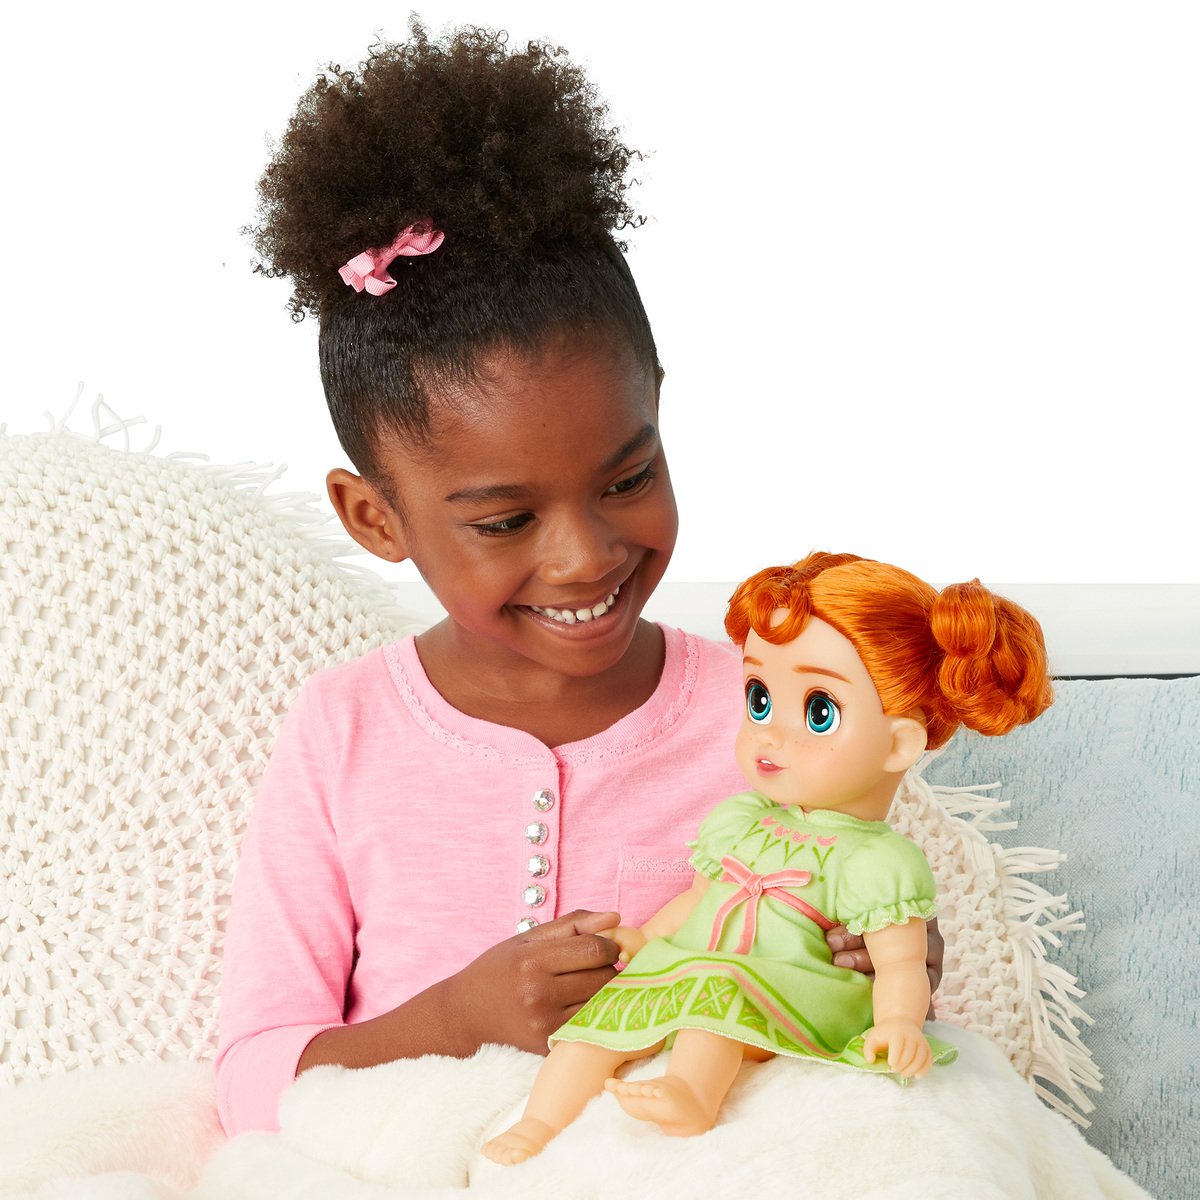 Disney Frozen-II Young Anna Doll 203614